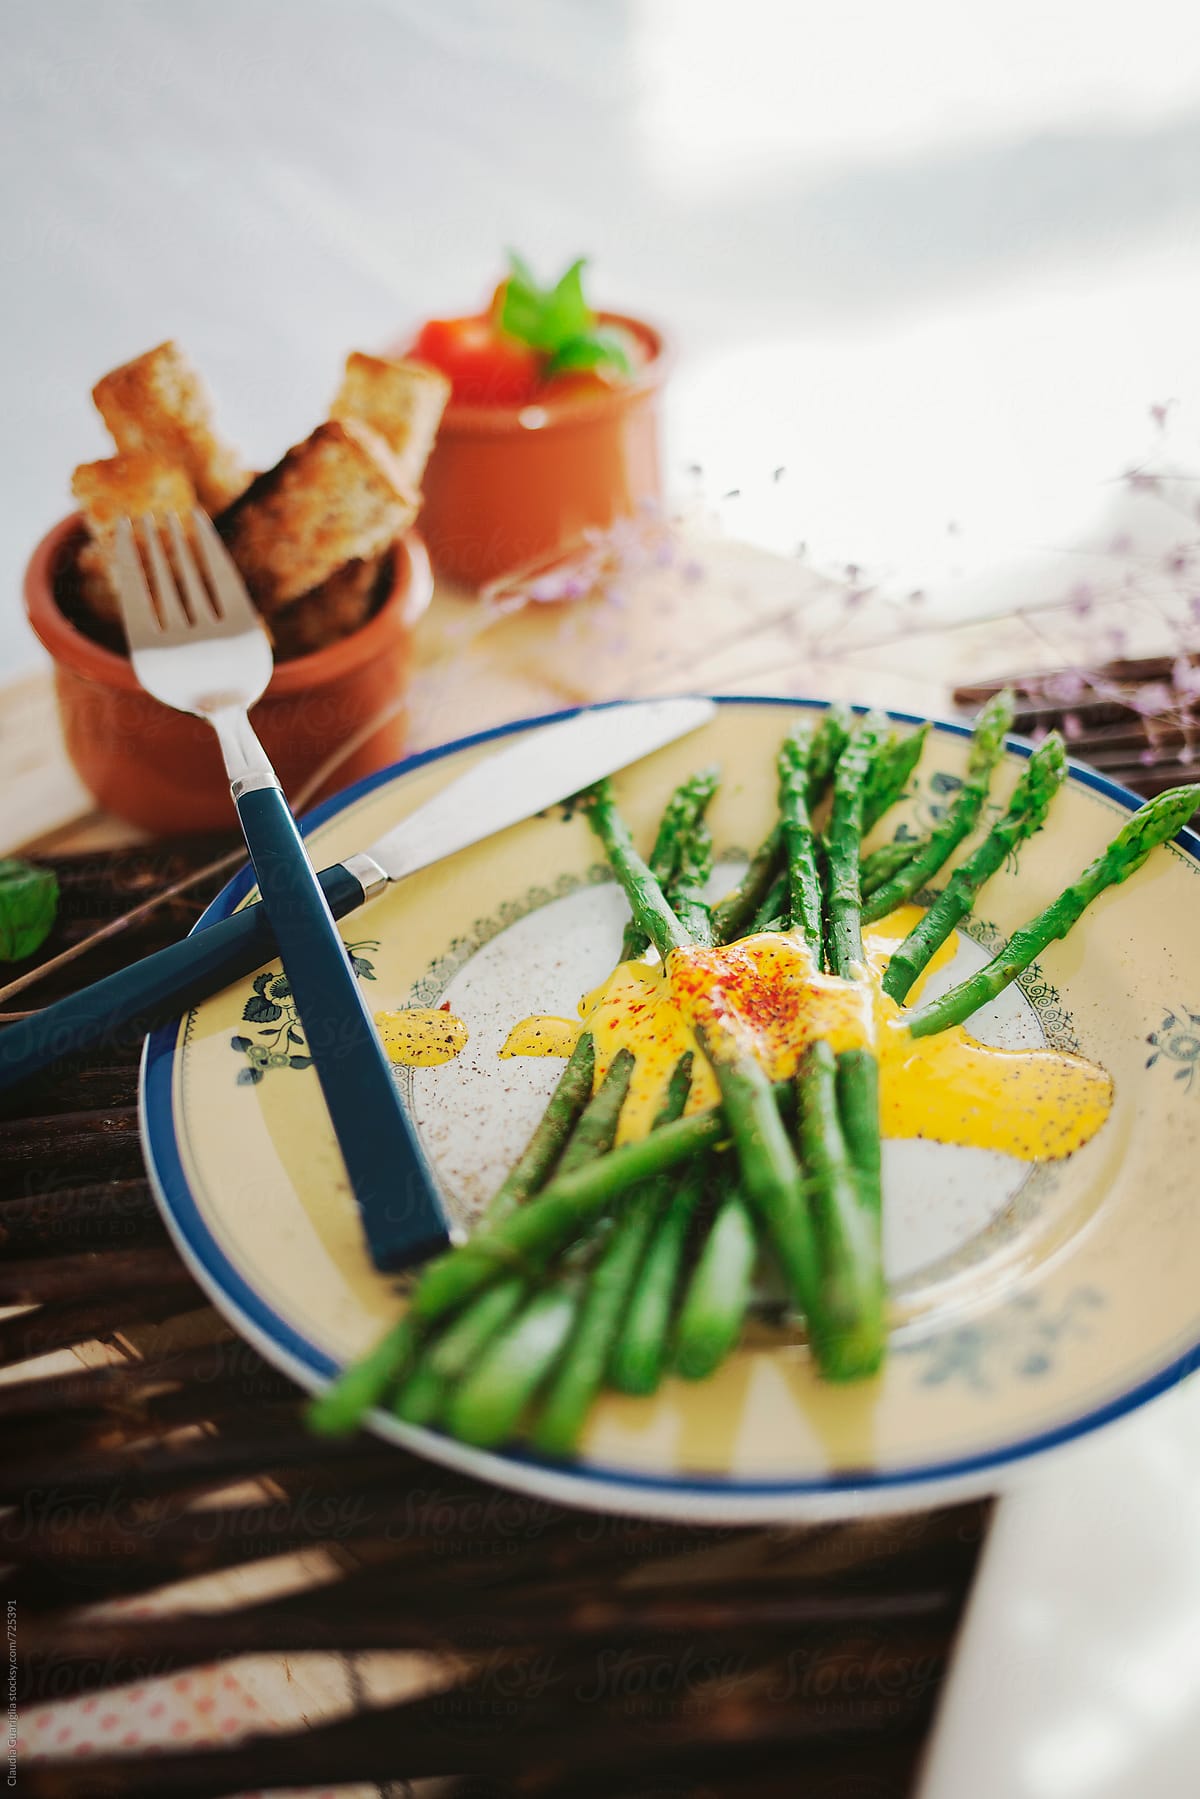 Green asparagus with saffron sauce